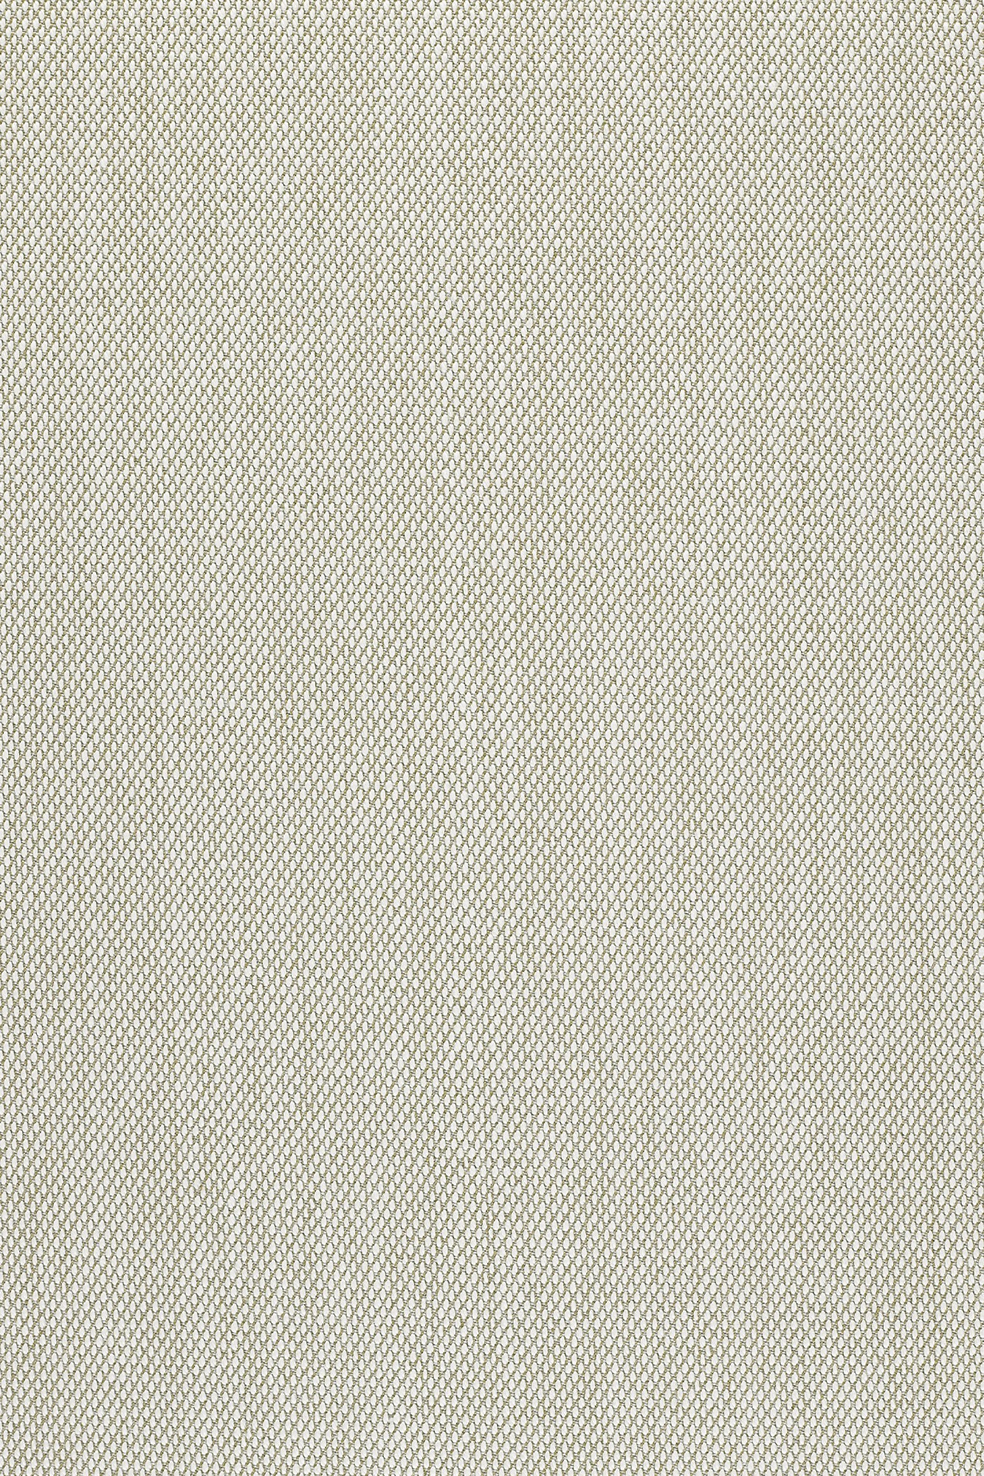 Fabric sample Steelcut Trio 3 213 white